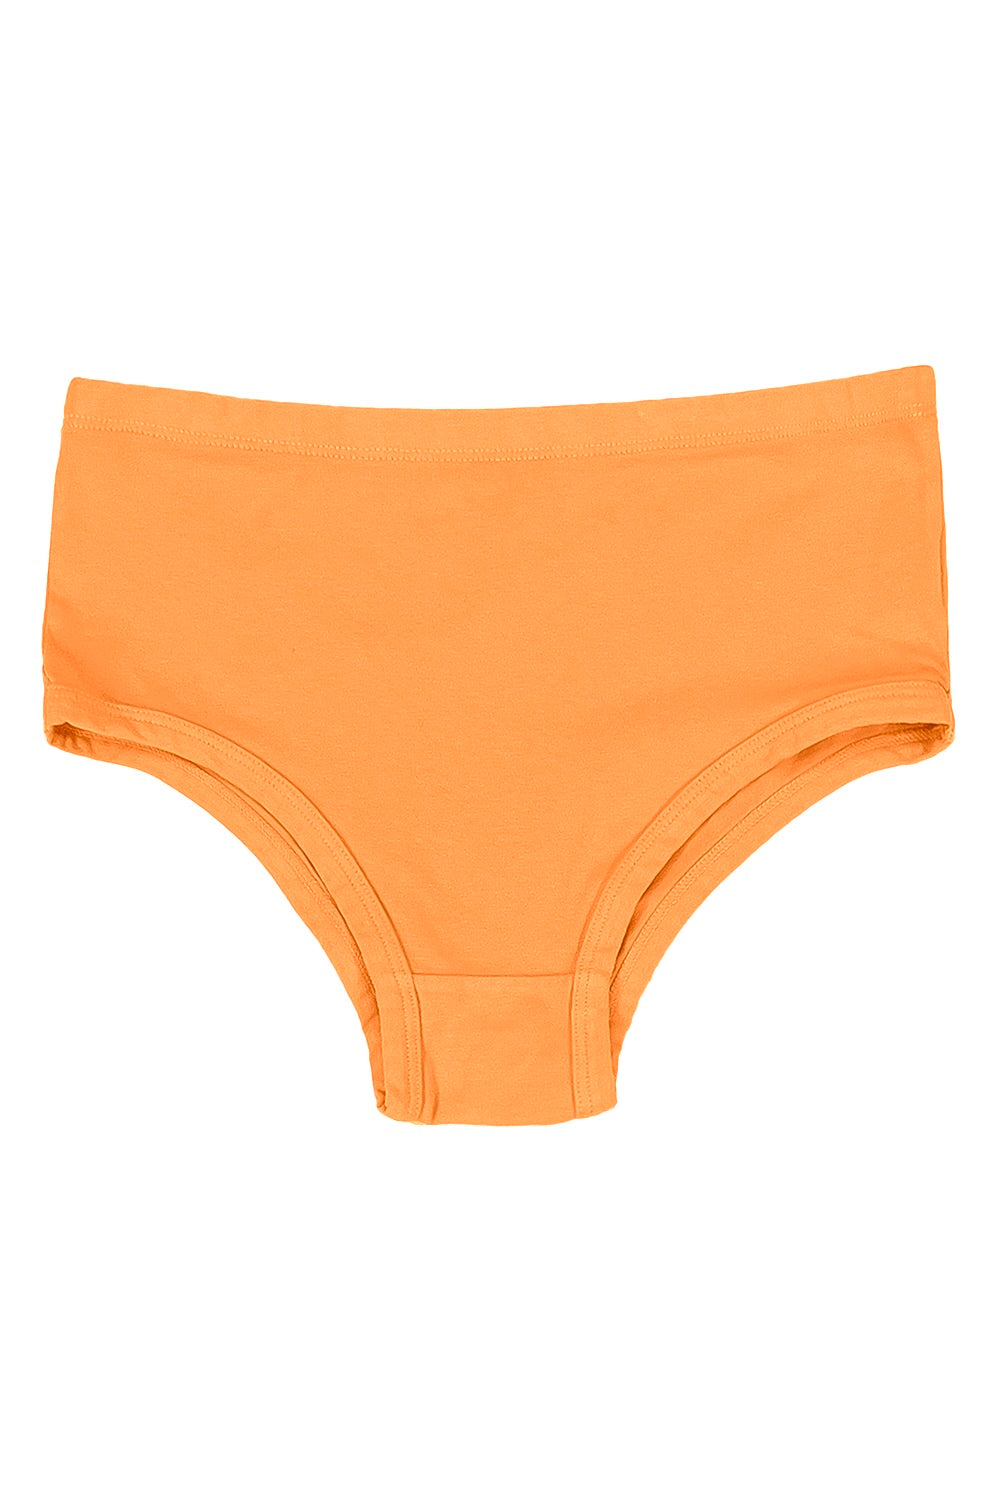 High Waist Brief | Jungmaven Hemp Clothing & Accessories / Color: Apricot Crush